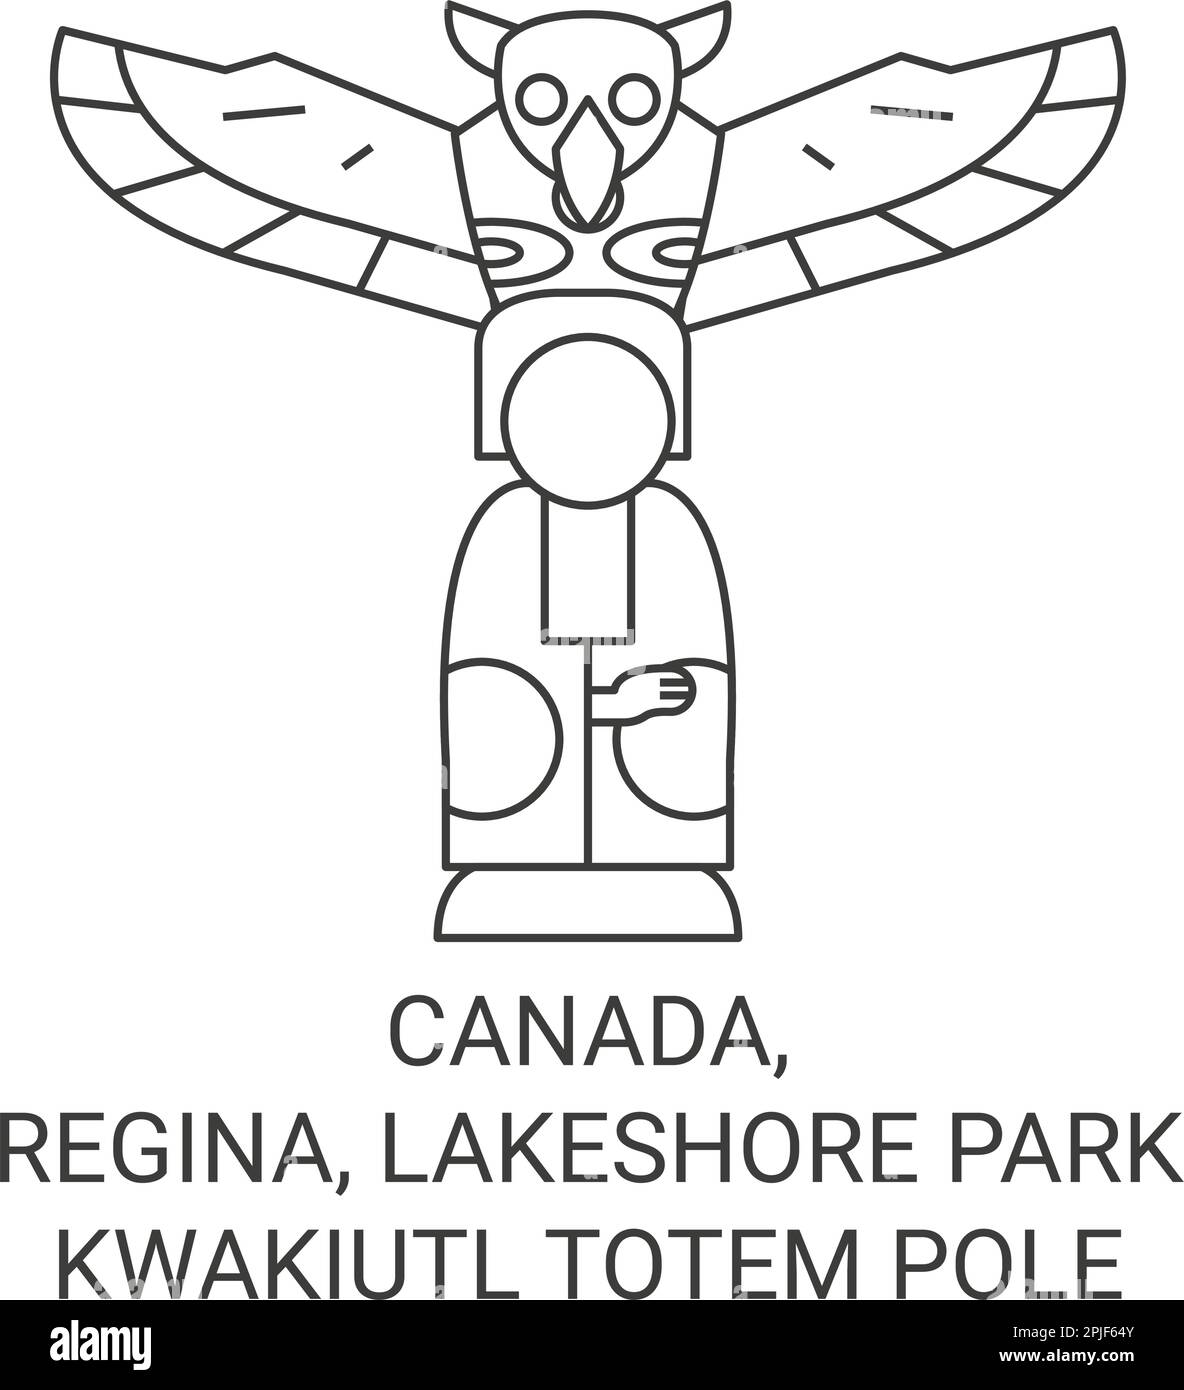 Canada, Regina, Lakeshore Park Kwakiutl Totem Pole travel landmark vector illustration Stock Vector